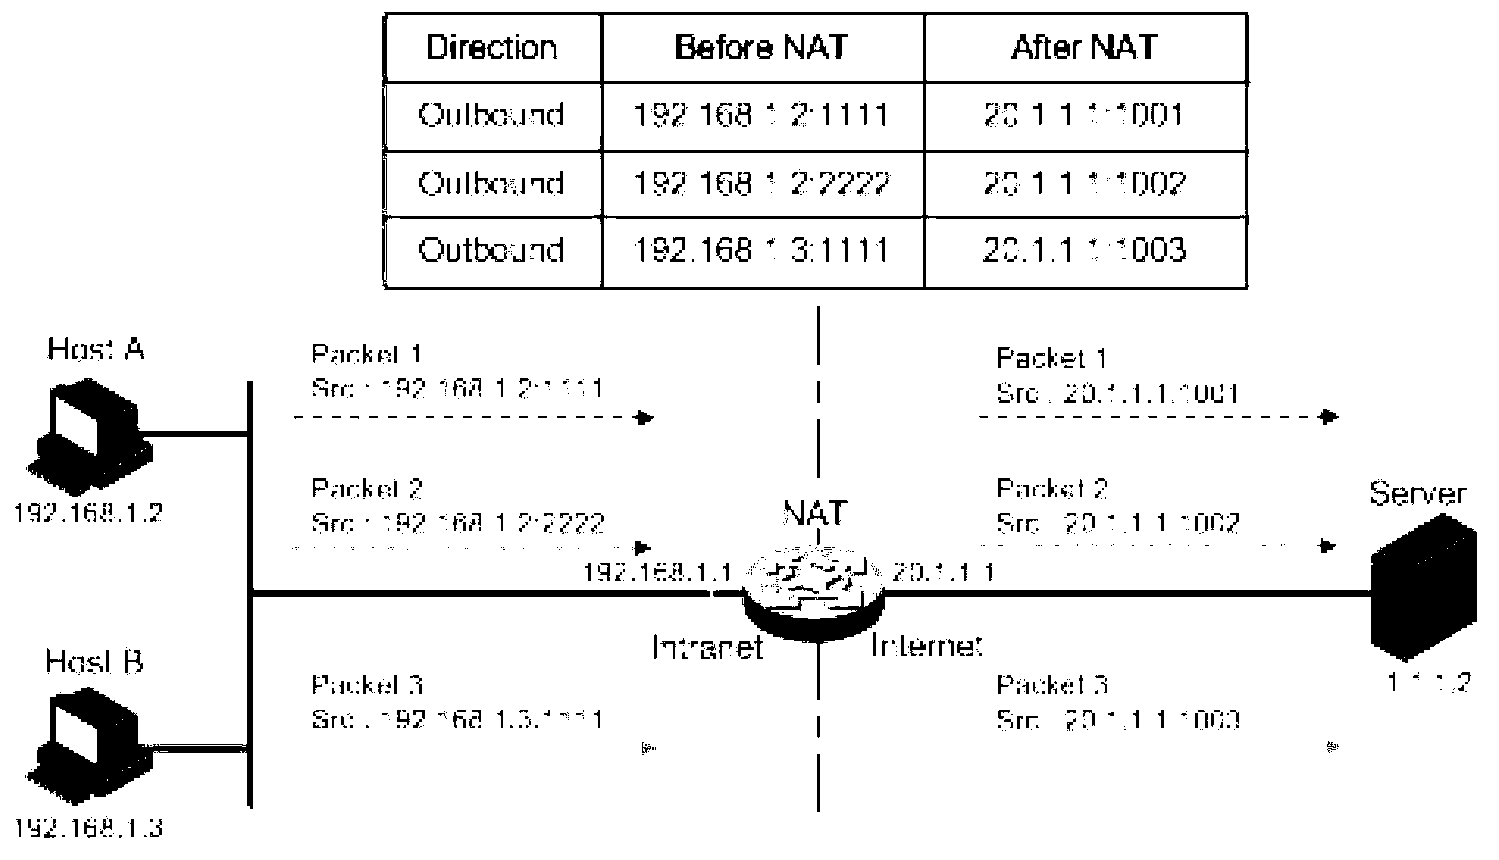 IPsec-based (internet protocol security-based) keep-alive method and equipment for NAT (network address translation) entries